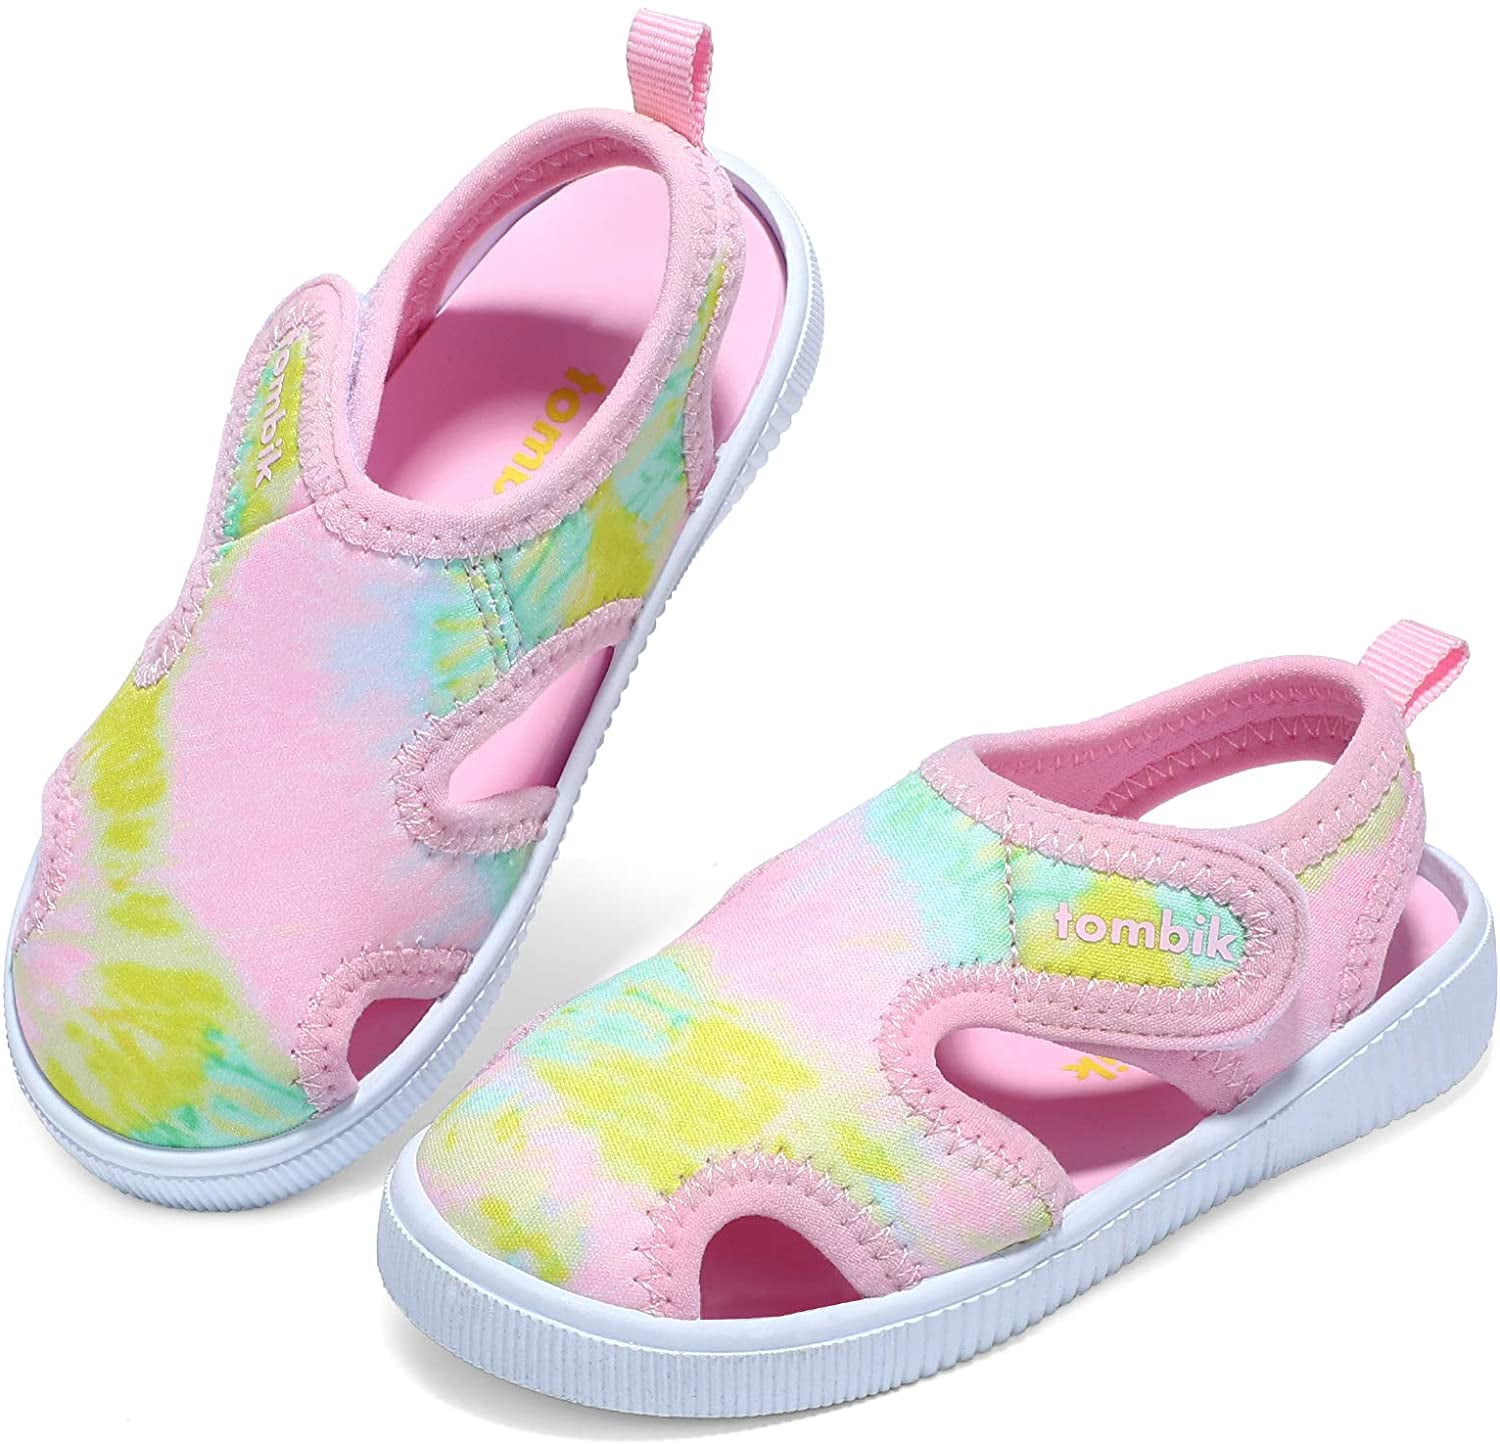 tombik Toddler Cute Aquatic Water Shoes Boys/Girls Beach Sandals 